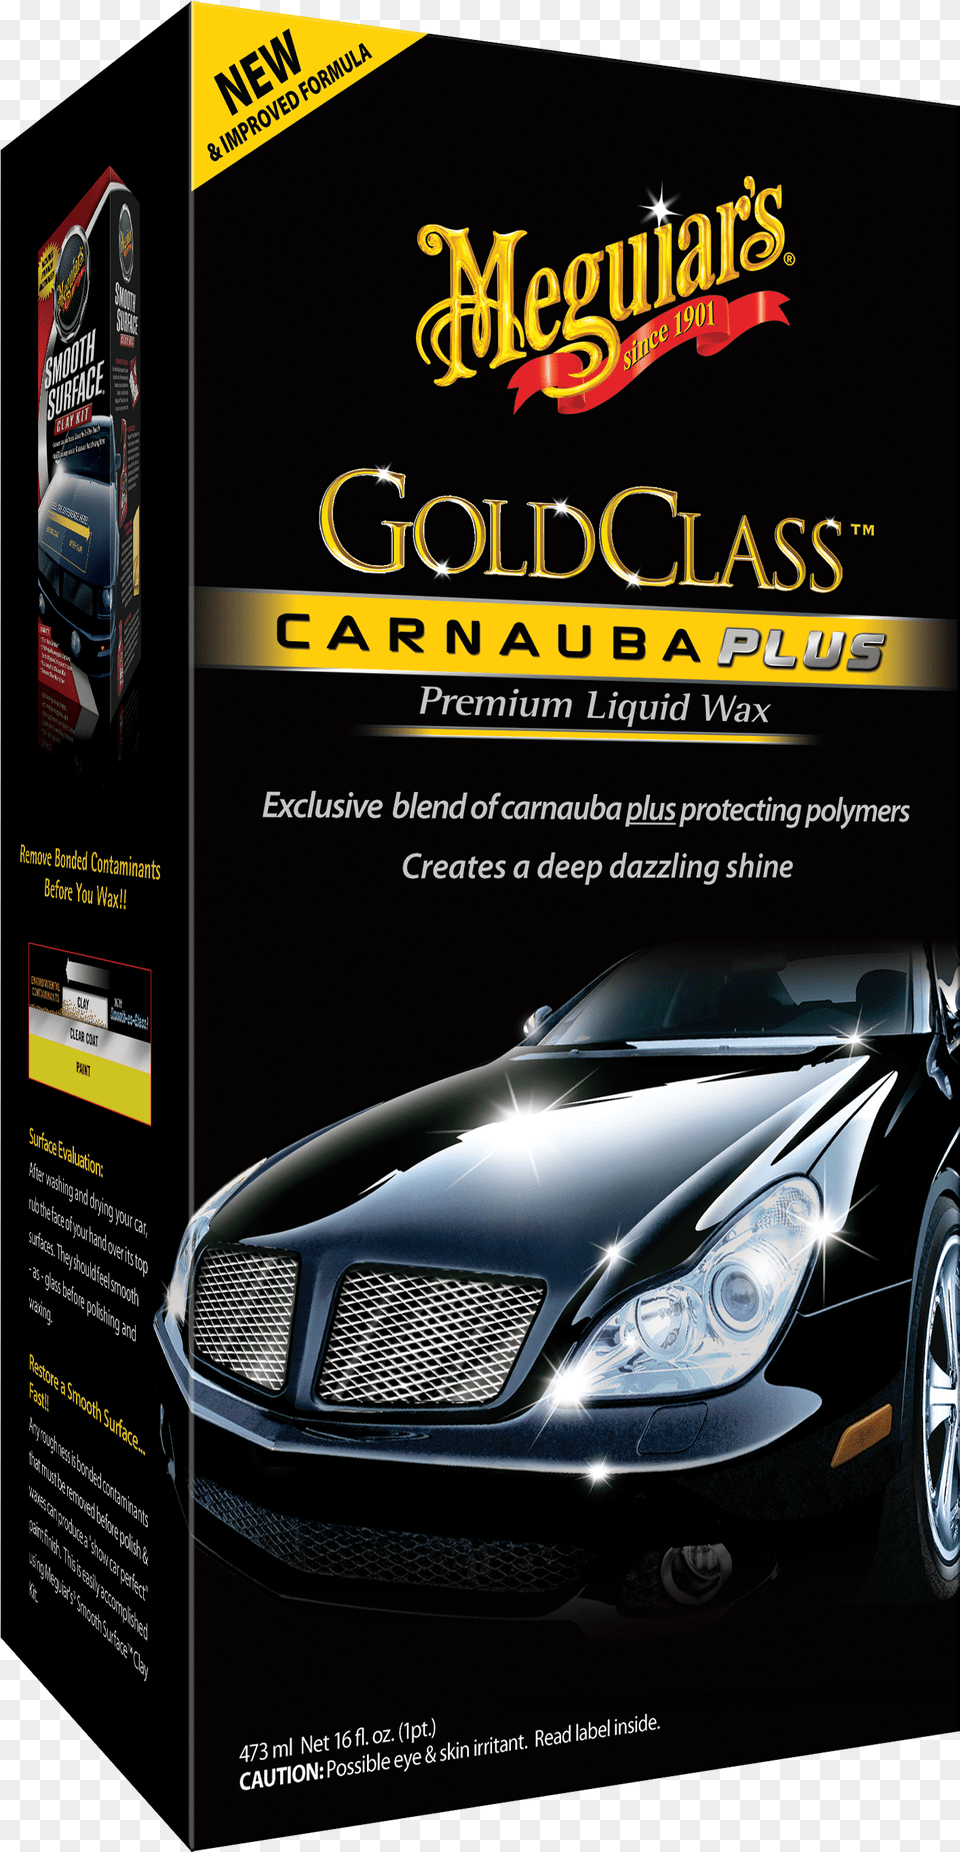 Gold Class Carnauba Plus Liquid Wax Meguiar39s Gold Class Carnauba Plus, Advertisement, Poster, Car, Transportation Png Image